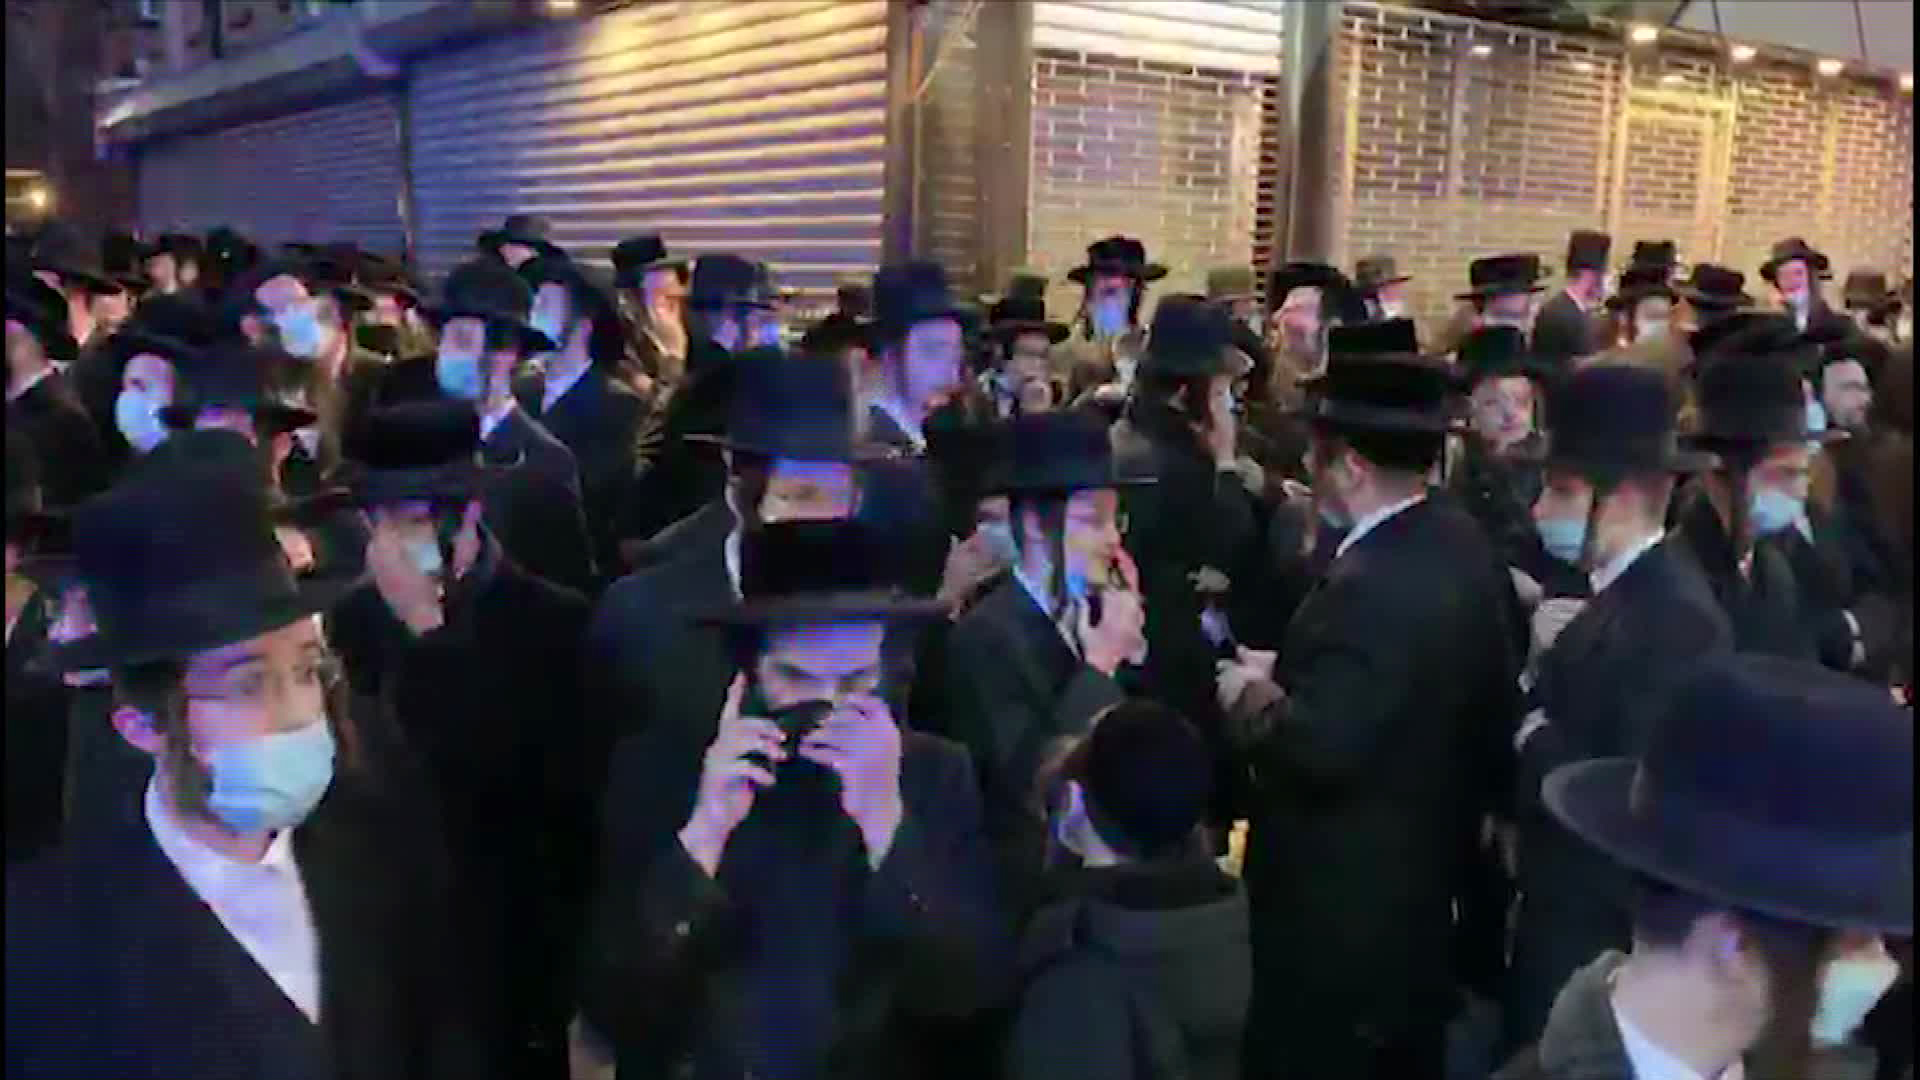 Orthodox Jewish community members attend the funeral of a prominent rabbi in Williamsburg, Brooklyn, on April 28.